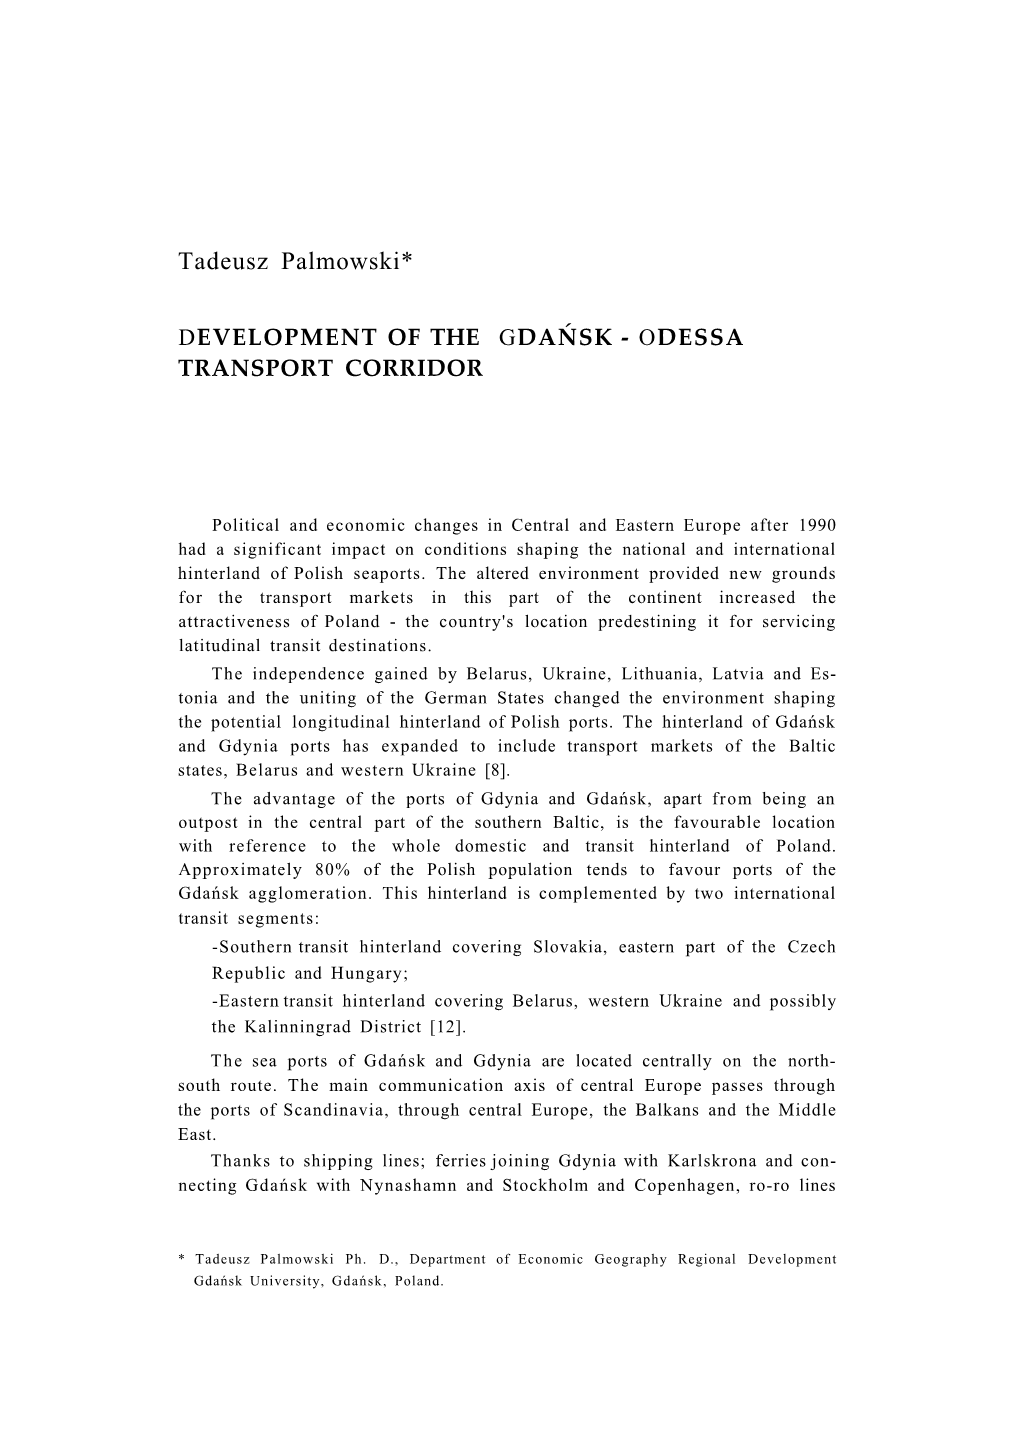 Development of the Gdańsk – Odessa Transport Corridor